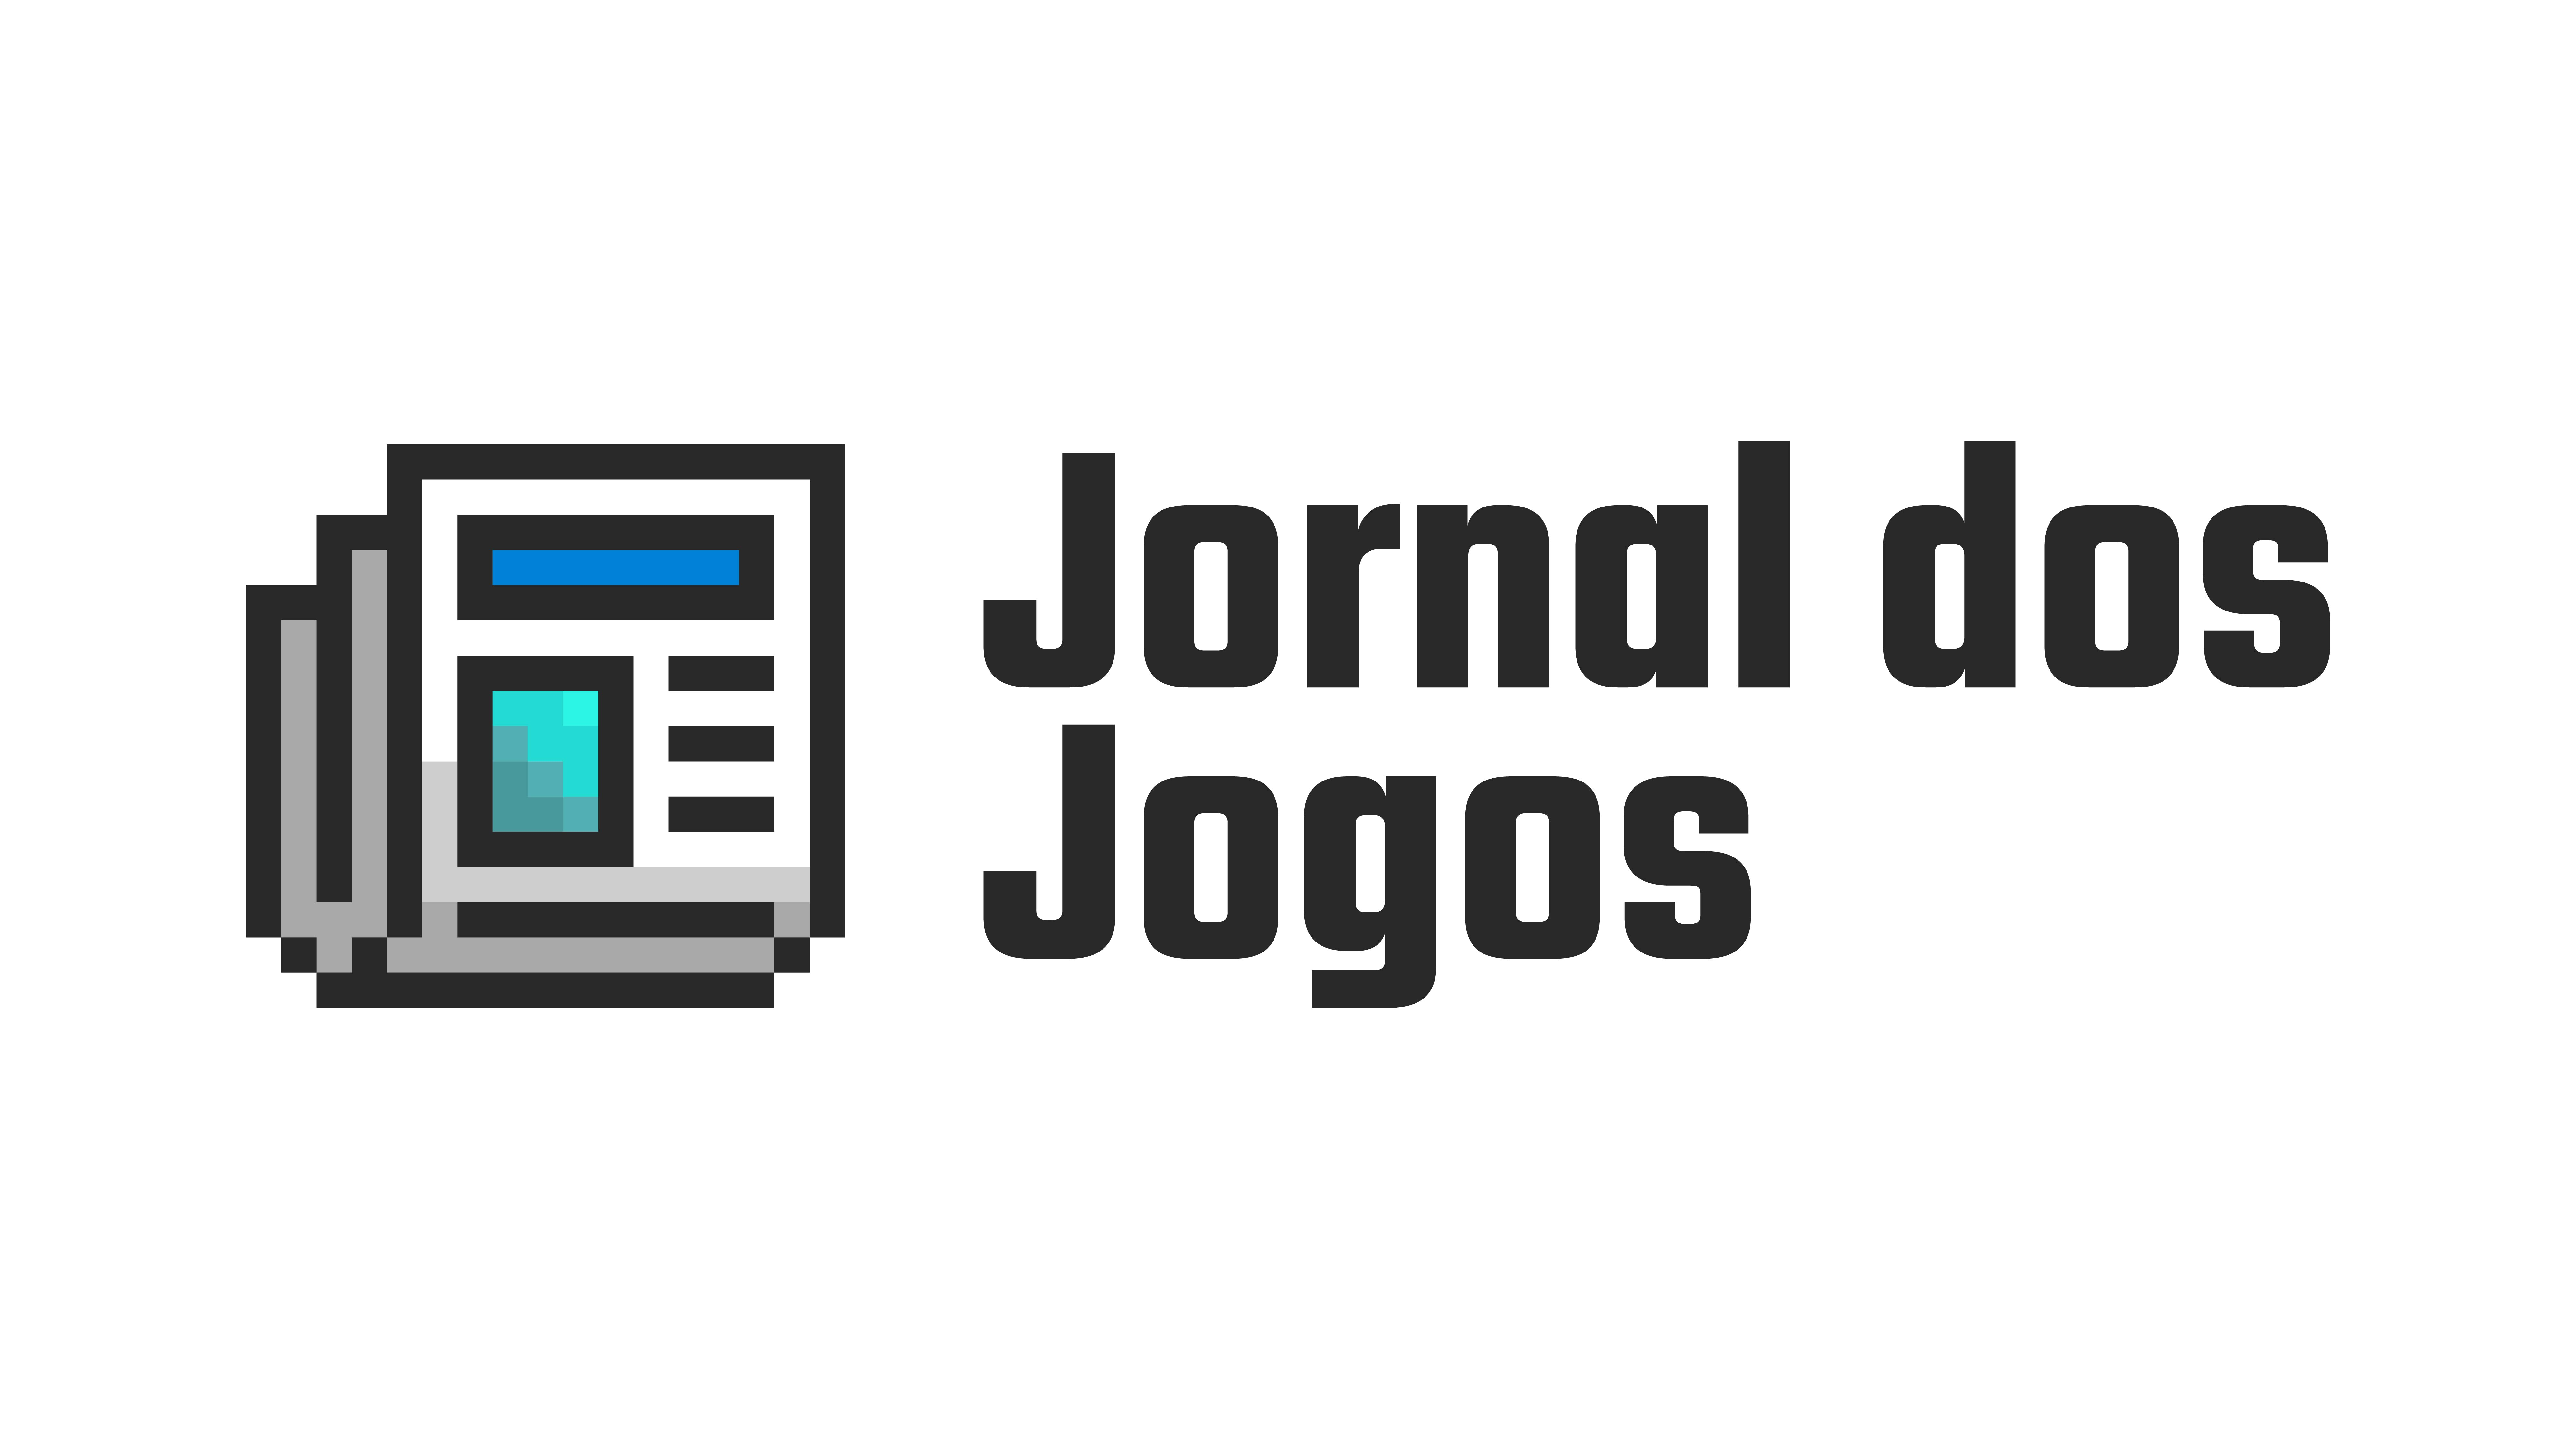 🎮 JornaldosJogos - News